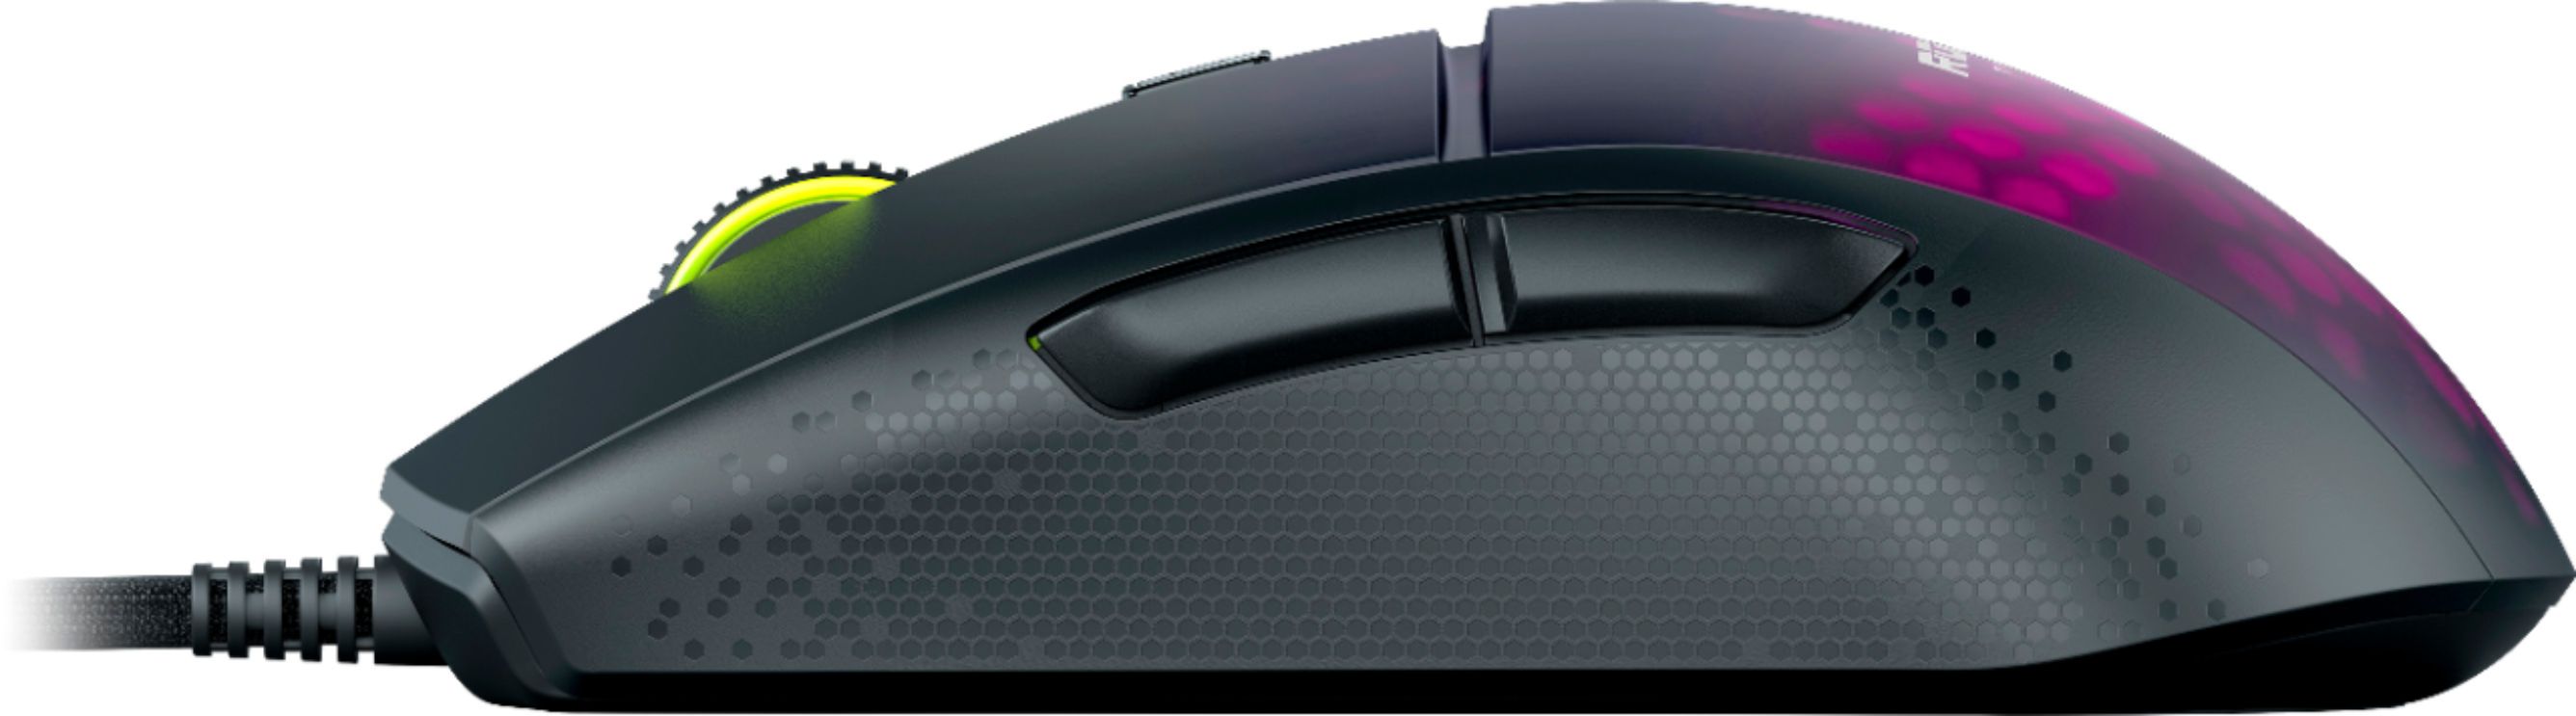 Co-Optimus - News - ROCCAT Burst Pro Air Wireless Mouse Review